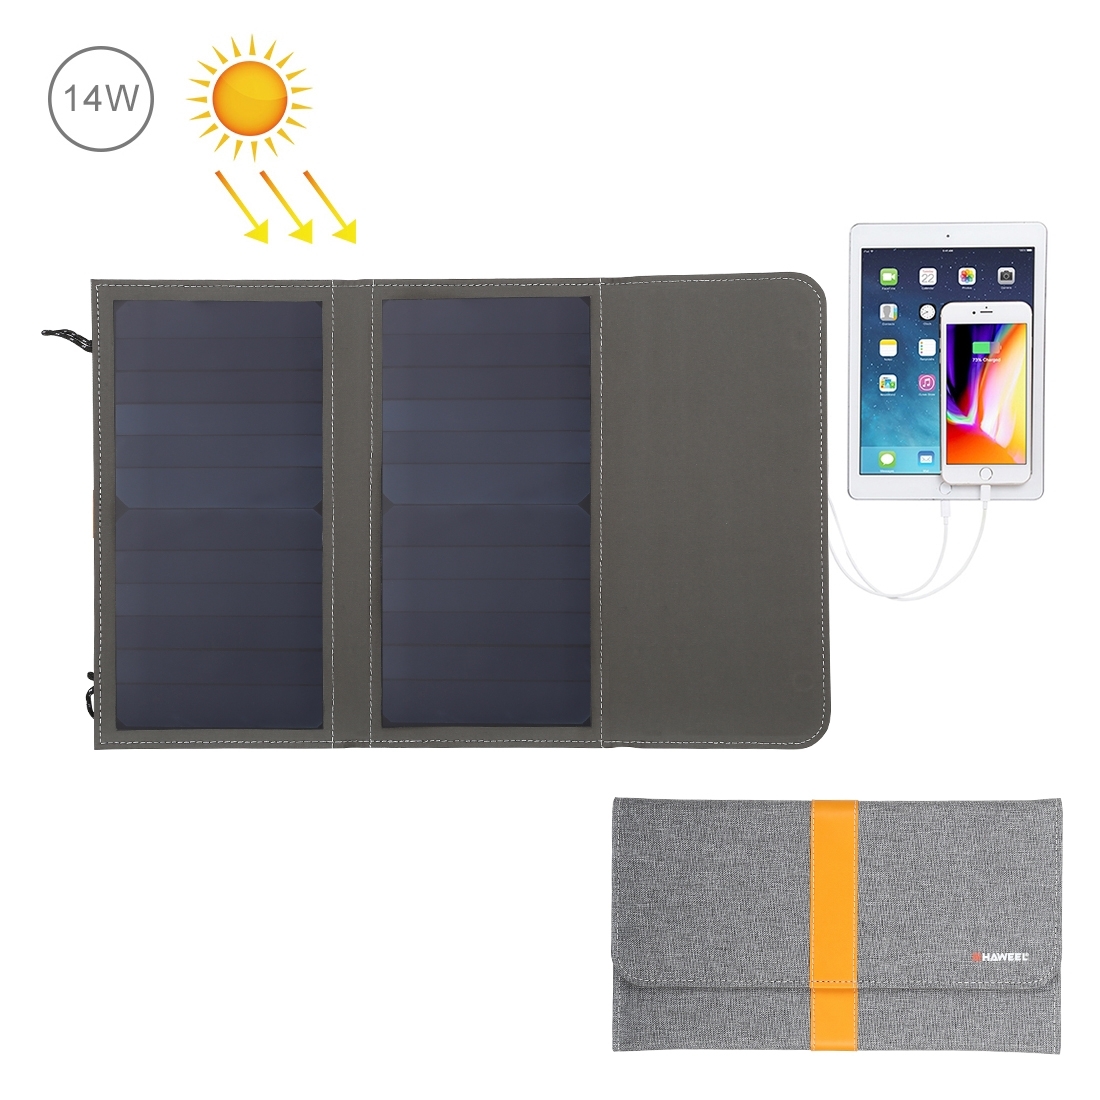 HAWEEL-5V-14W-Waterproof-Solar-Charge-Bag-Folding-Panel-DIY-Power-Bank-with-Dual-USB-1615195-7